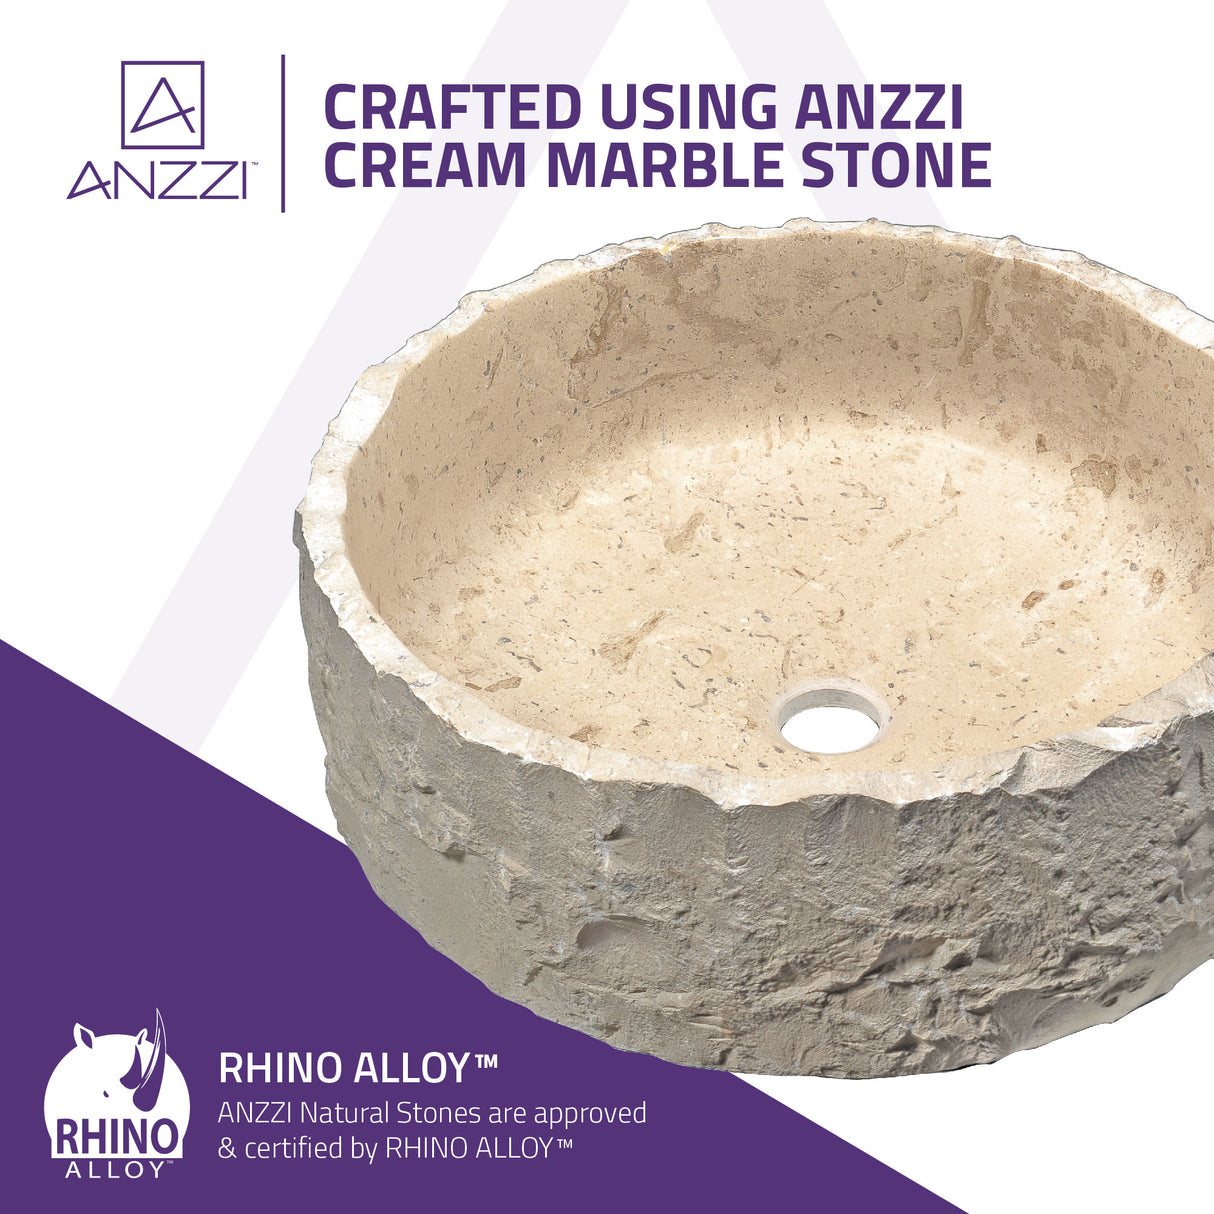 ANZZI LS-AZ8173 Iro Vessel Sink in Classic Cream Marble